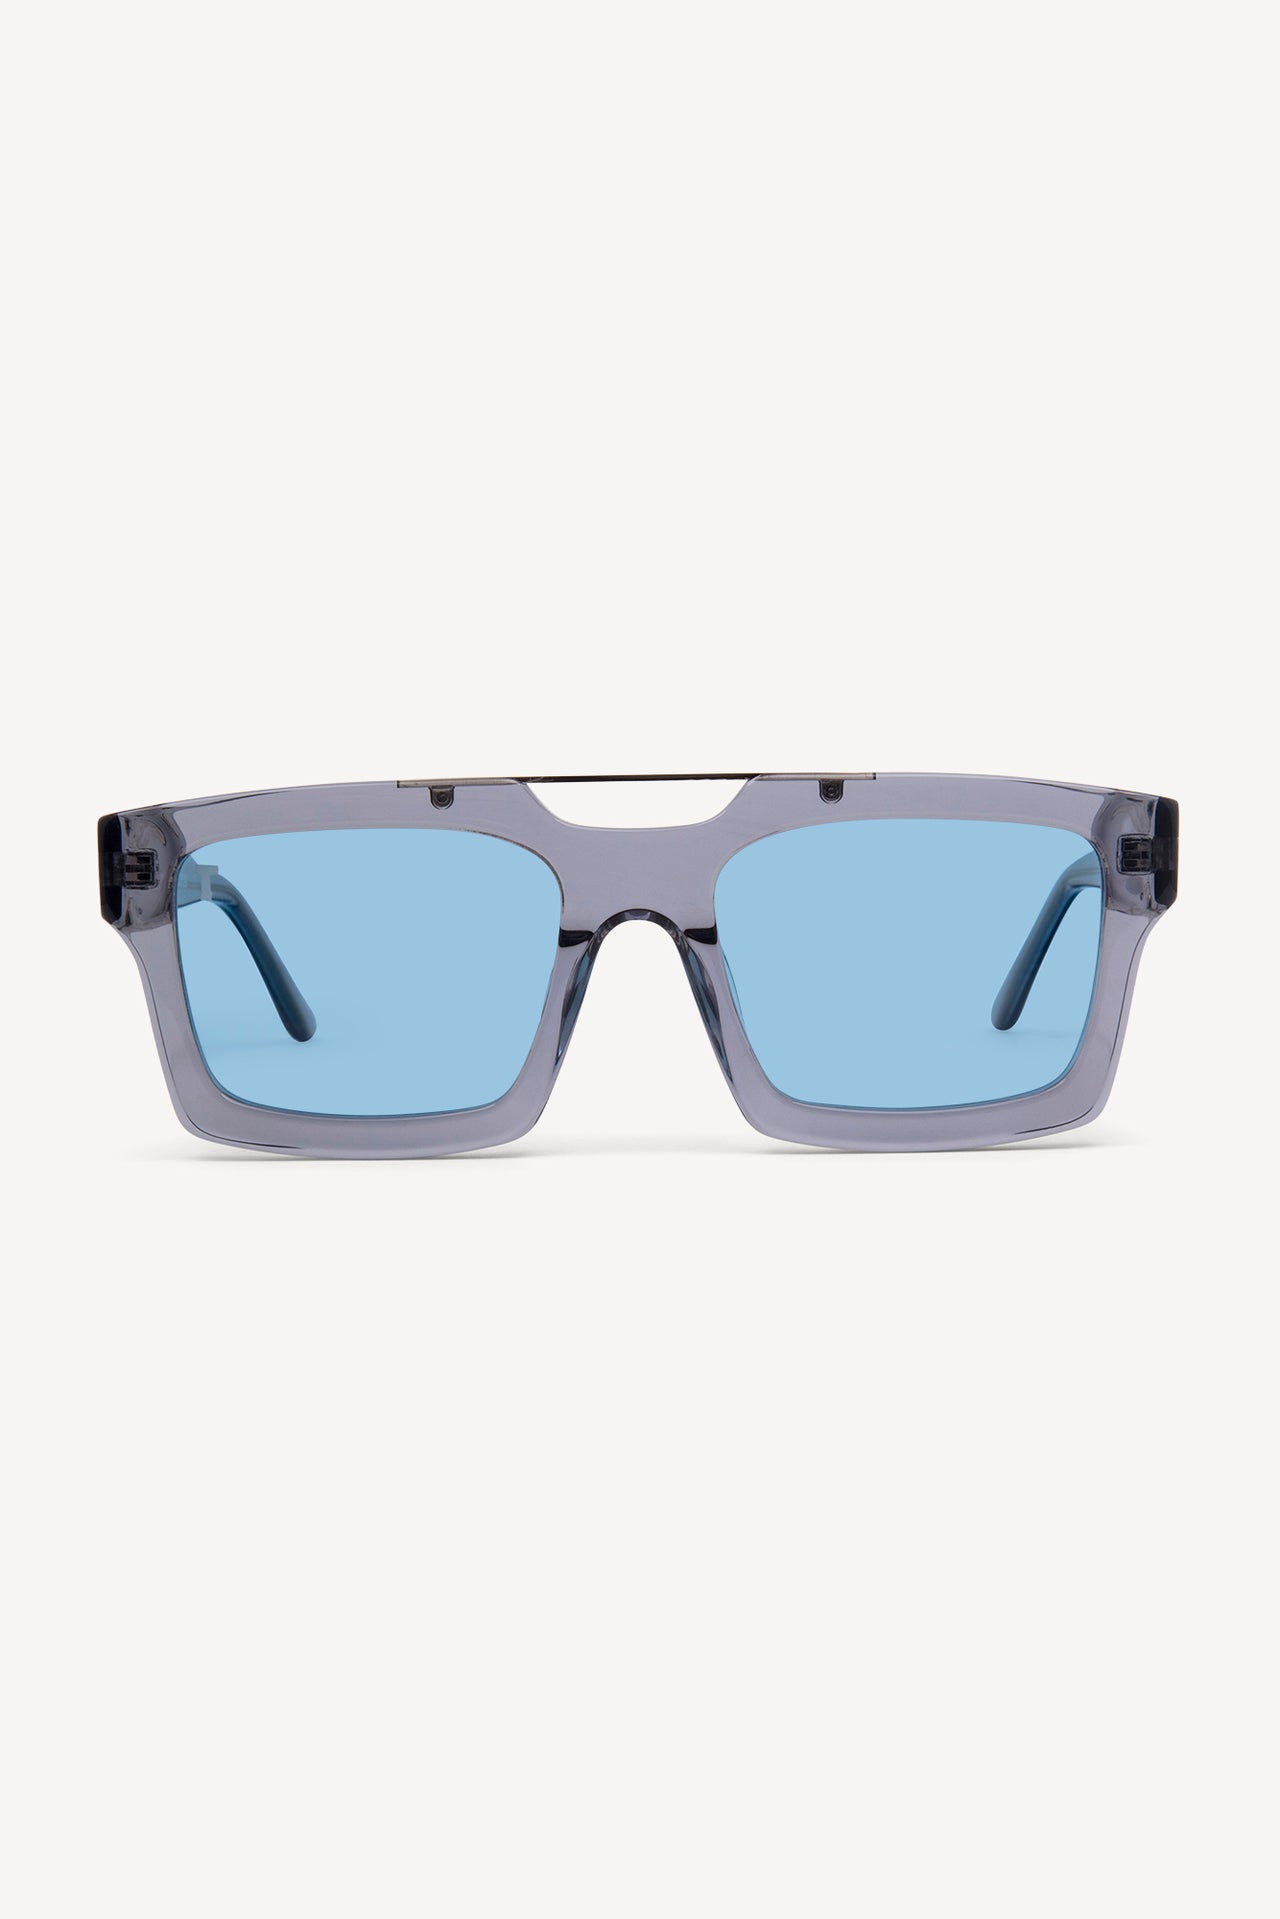 TOATIE Havana Square Sunglasses GREY/BLUE